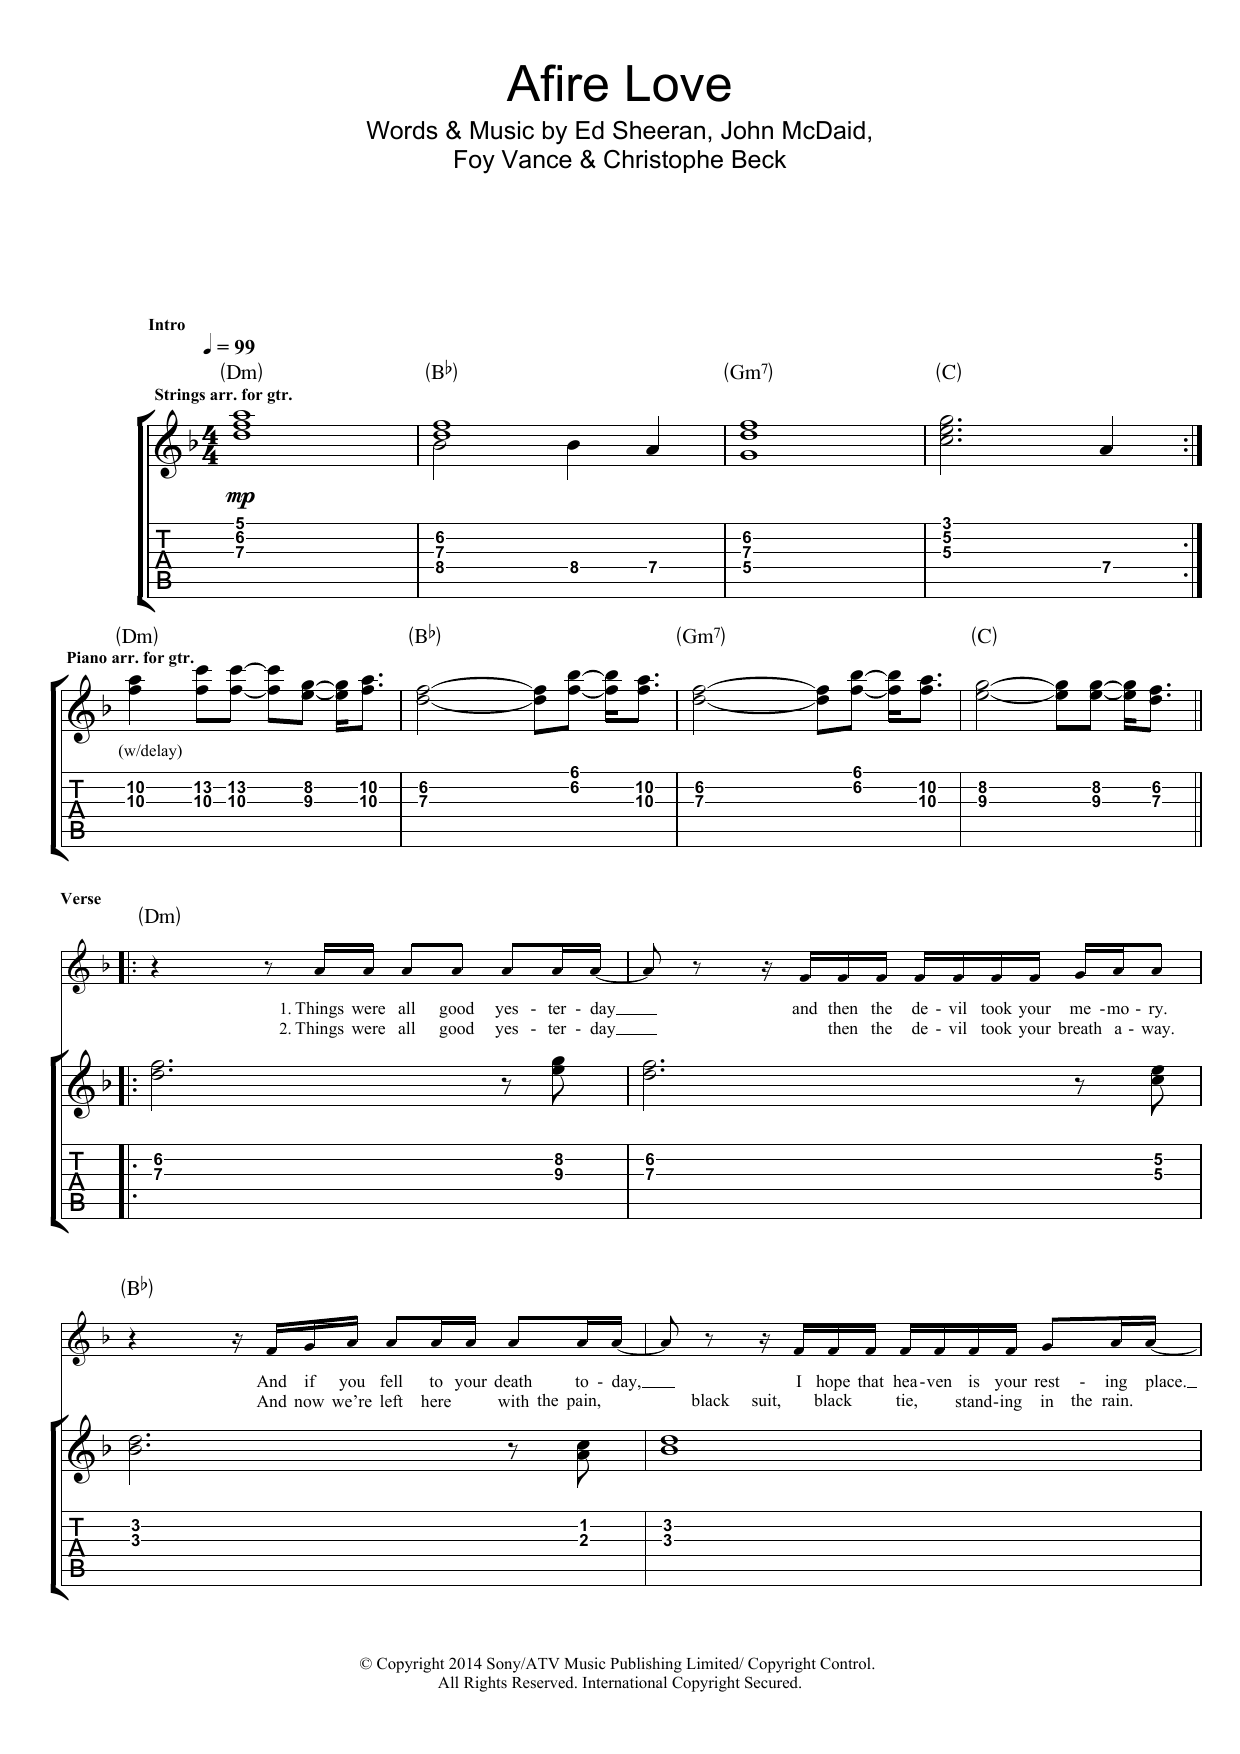 Ed Sheeran Afire Love Sheet Music Notes & Chords for Ukulele - Download or Print PDF